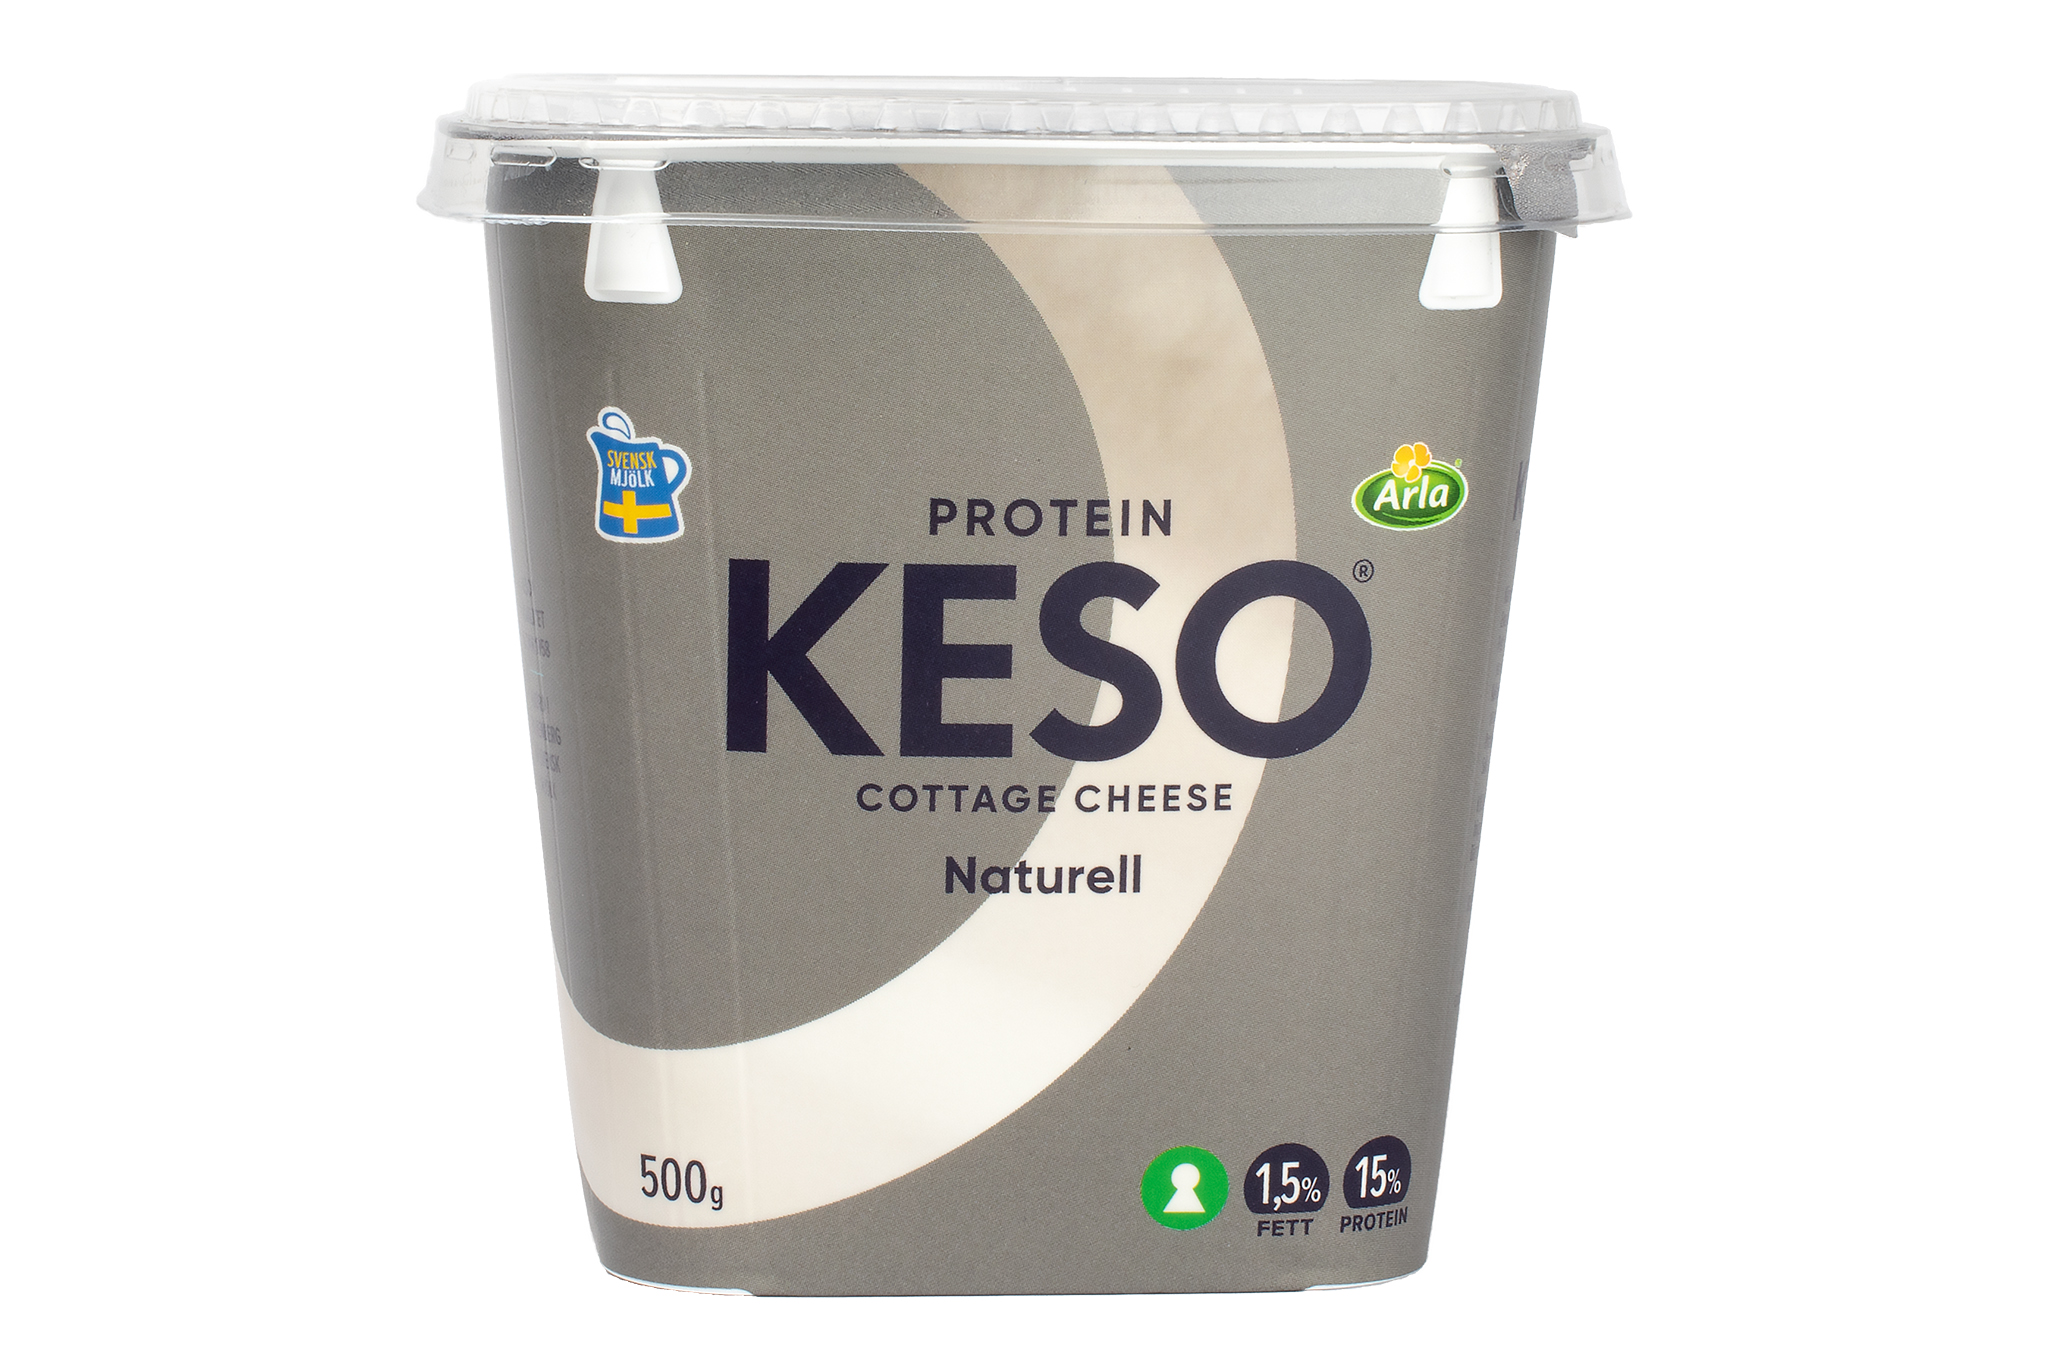 Arla Keso protein